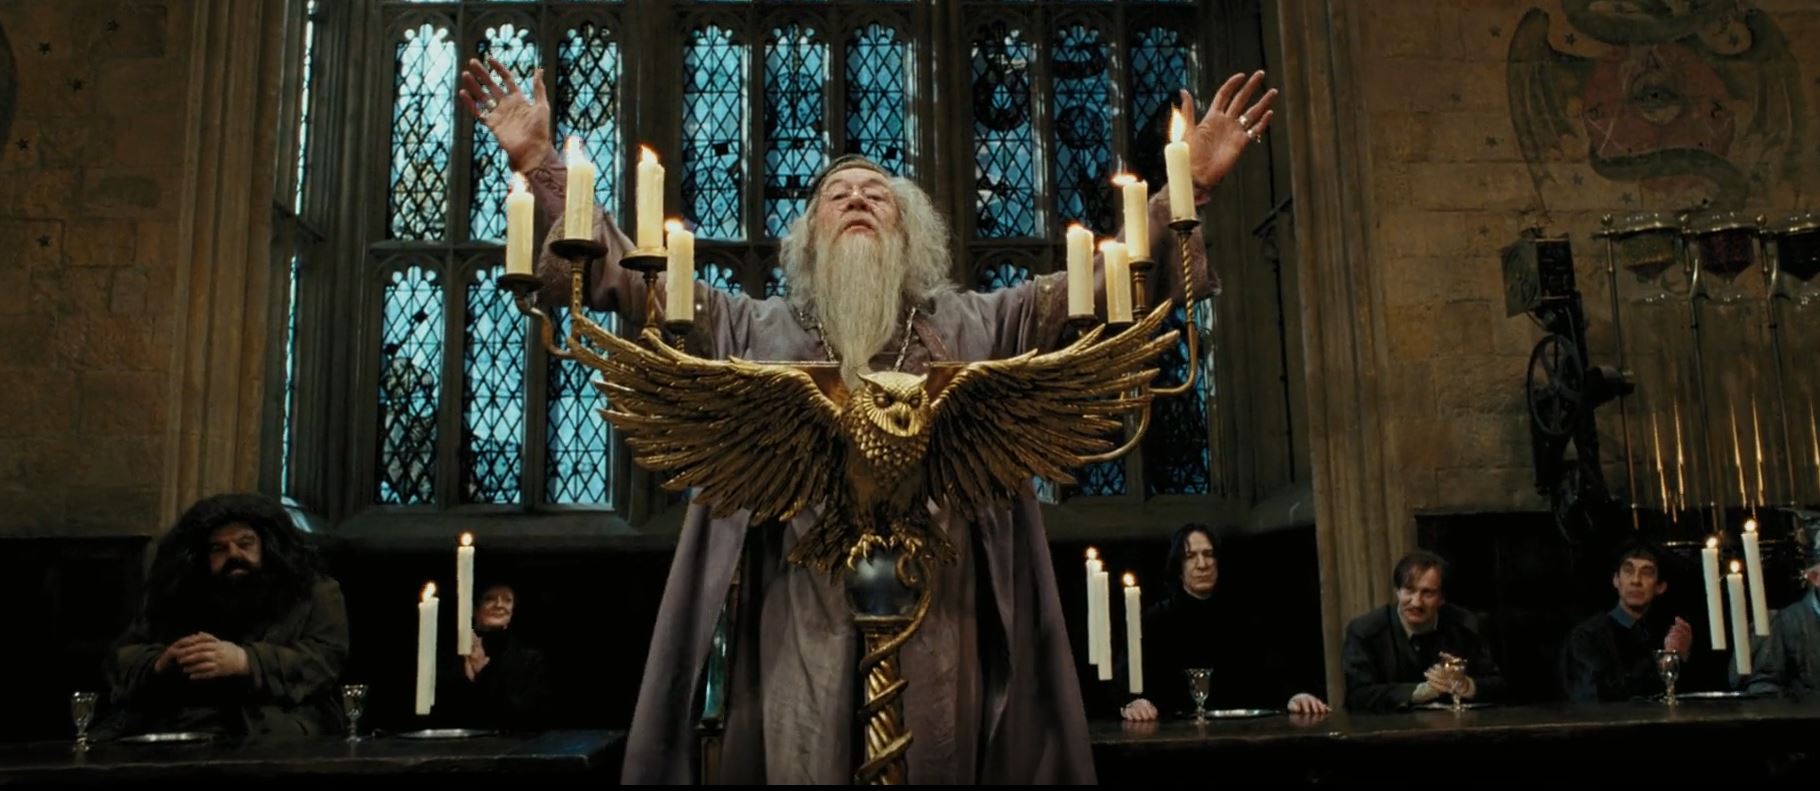 j.k. rowling's surprising revelation about dumbledore